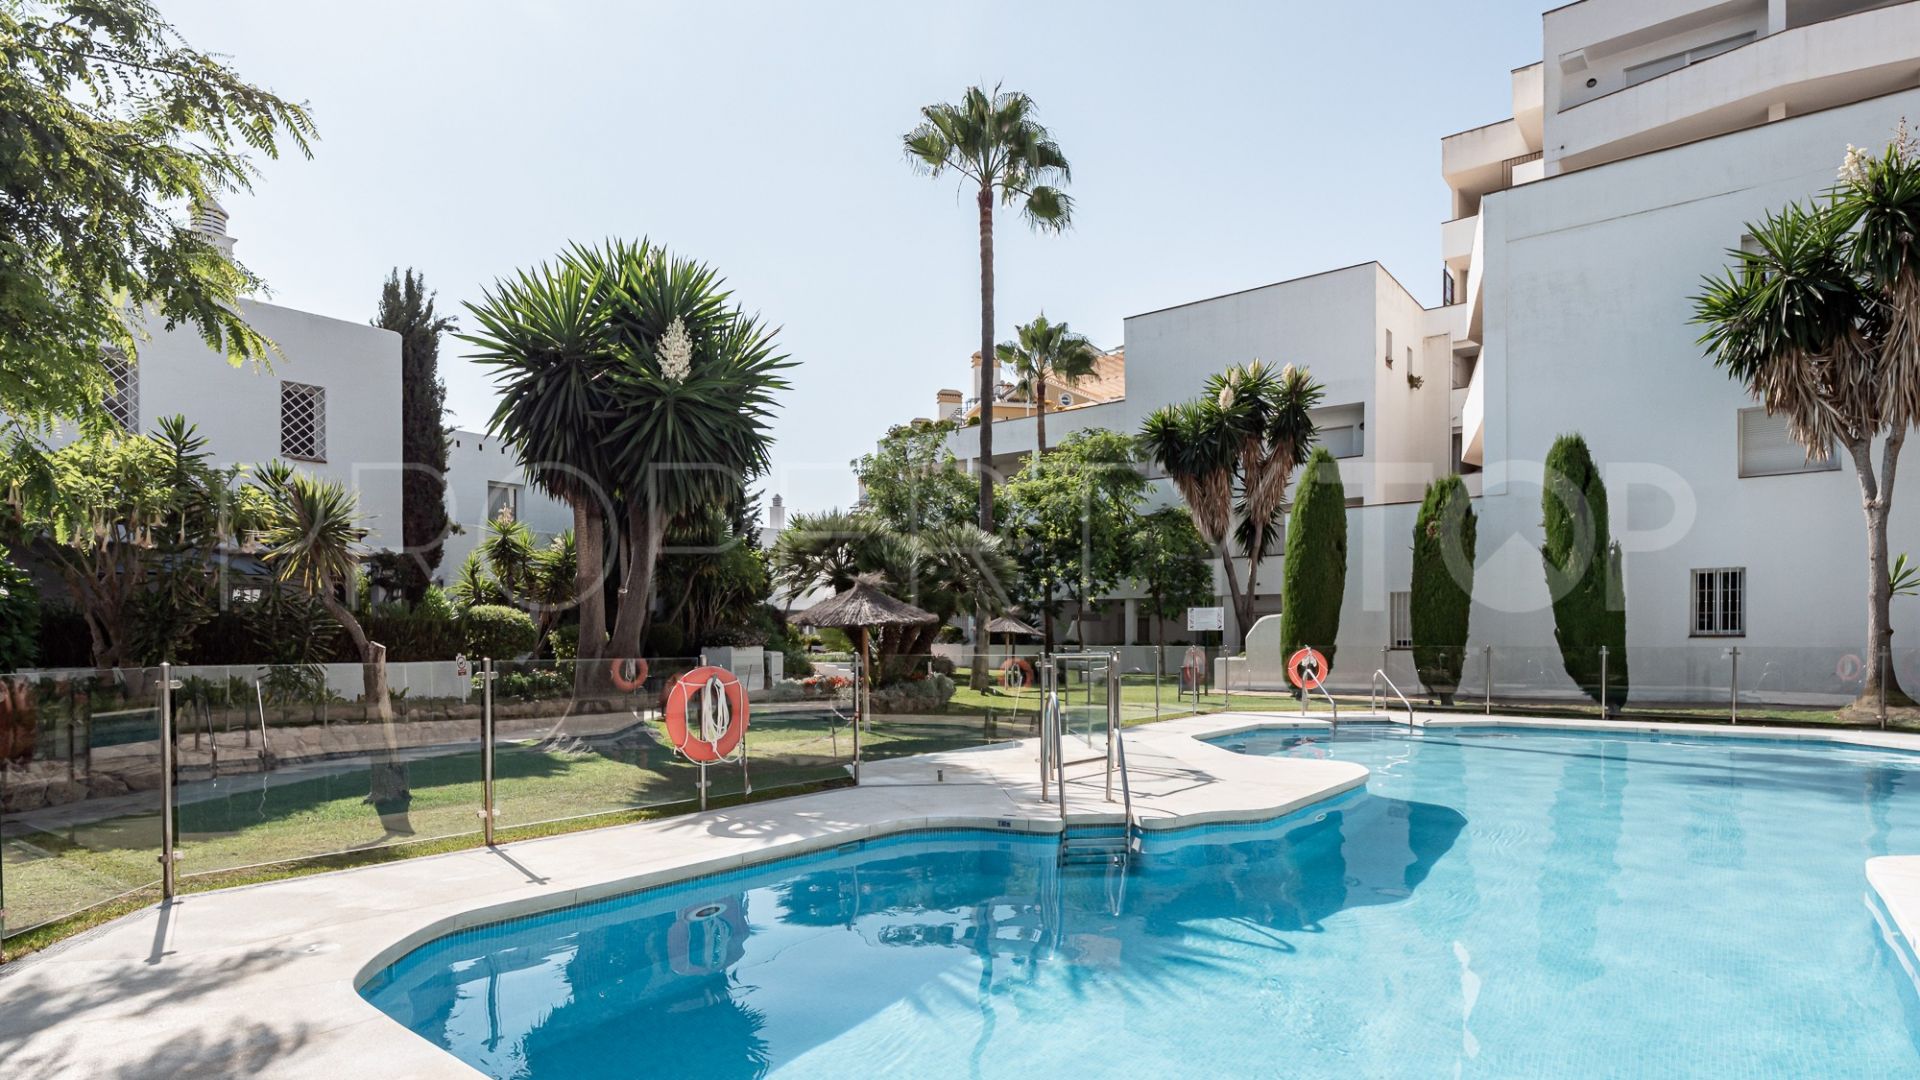 Jardines de Andalucia apartment for sale